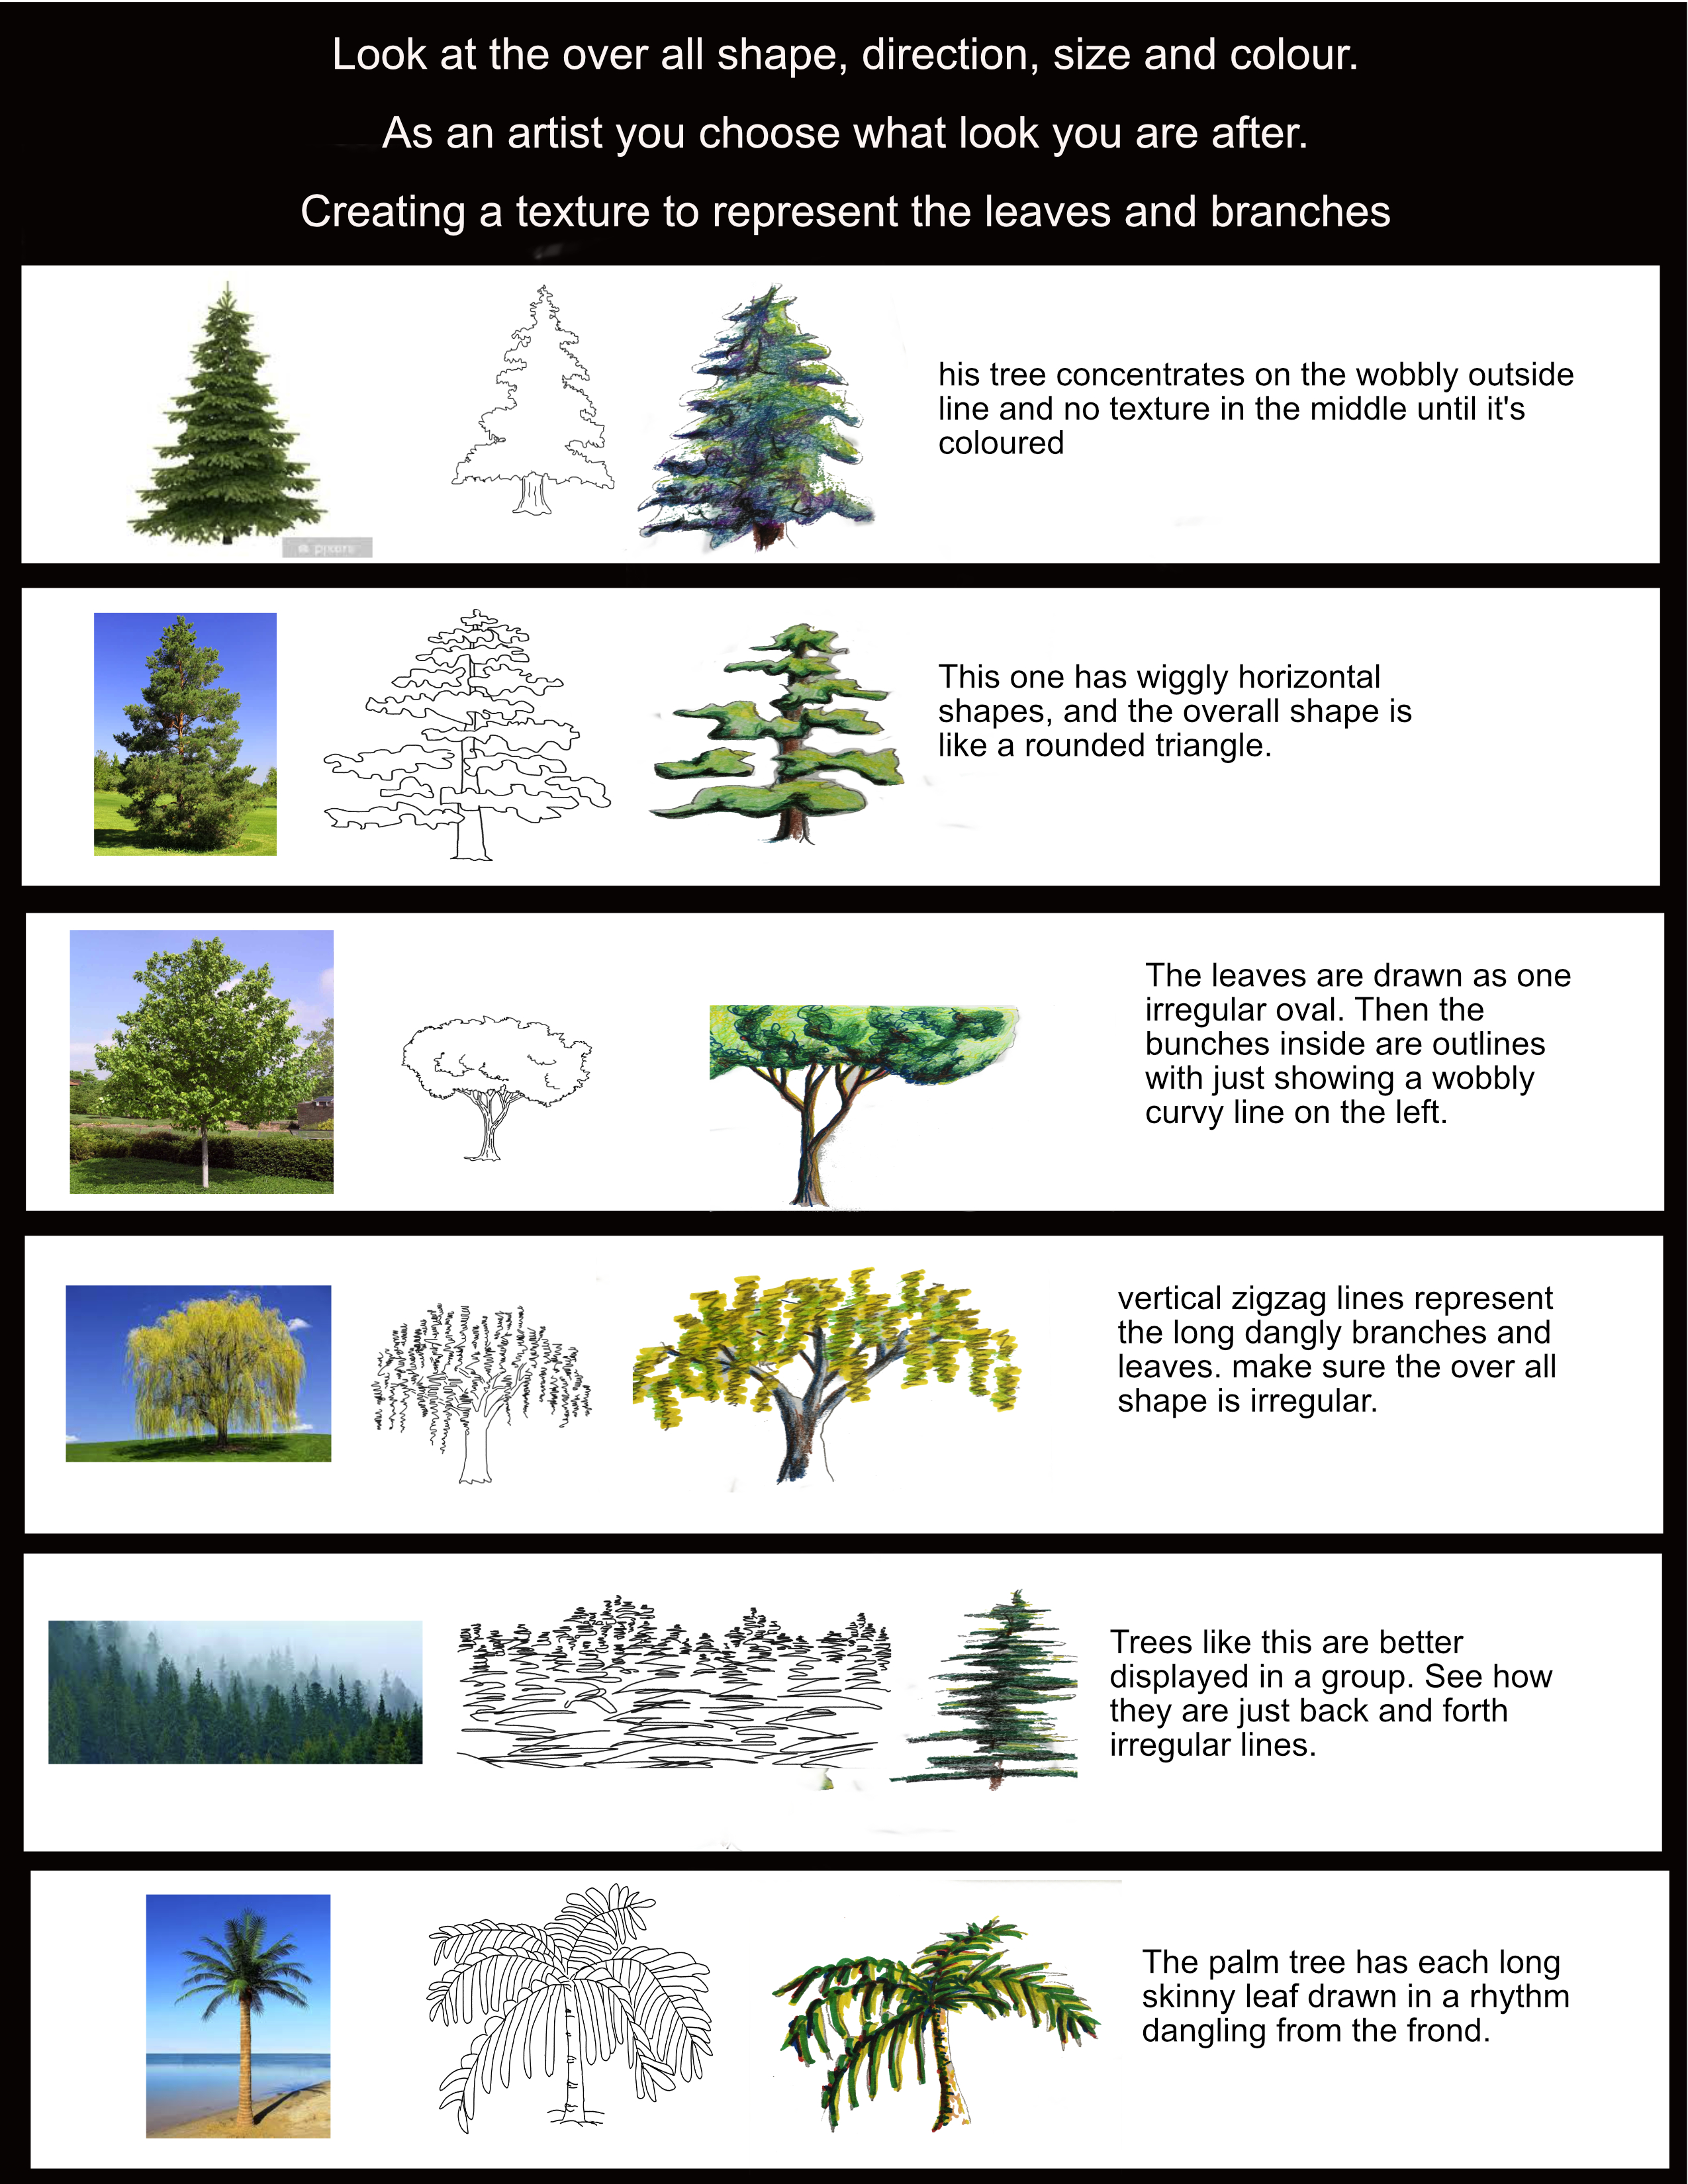 info on trees